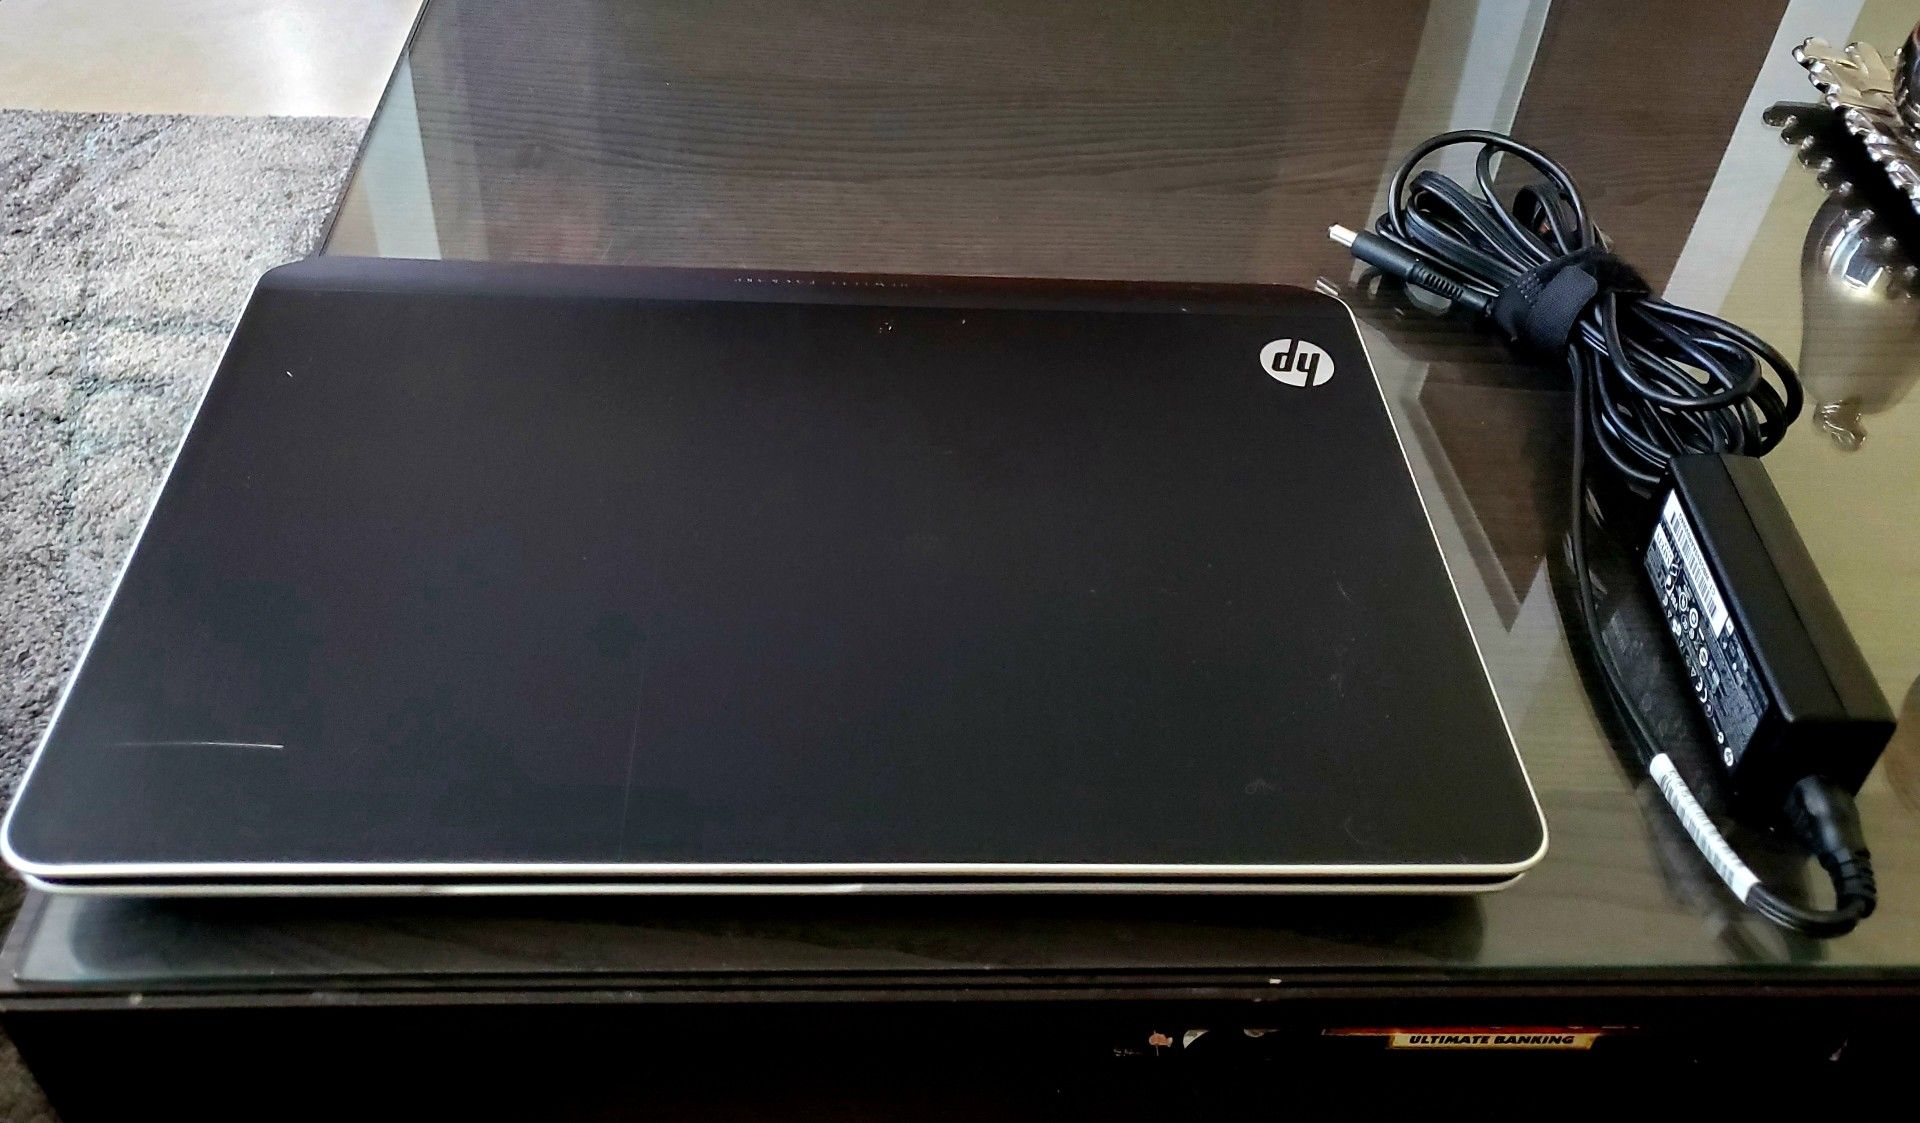 HP ENVY dv6 Notebook PC